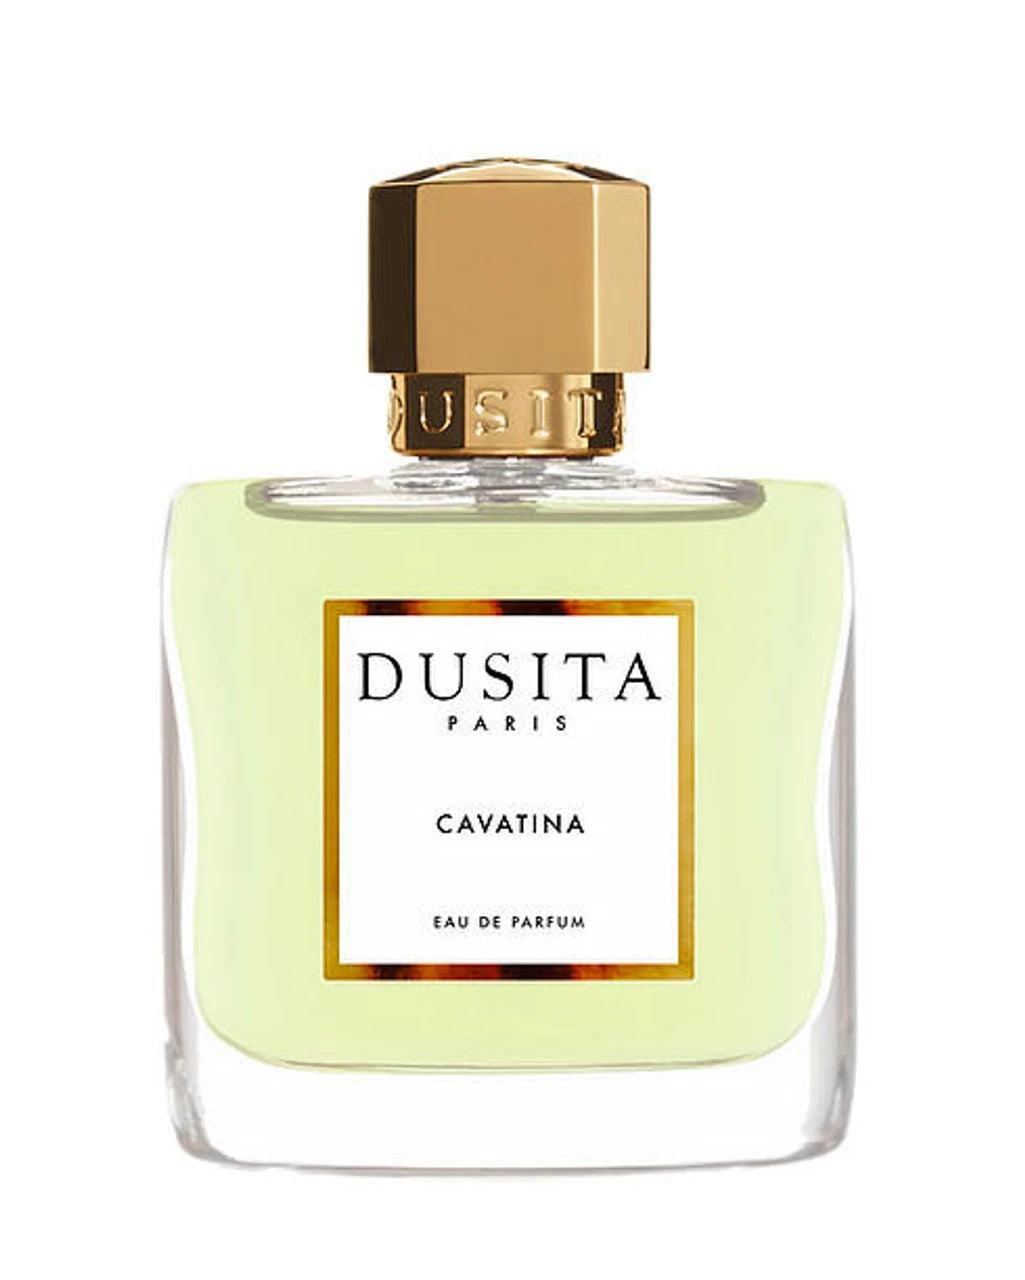 Dusita Cavatina Eau de Parfum 100 ml